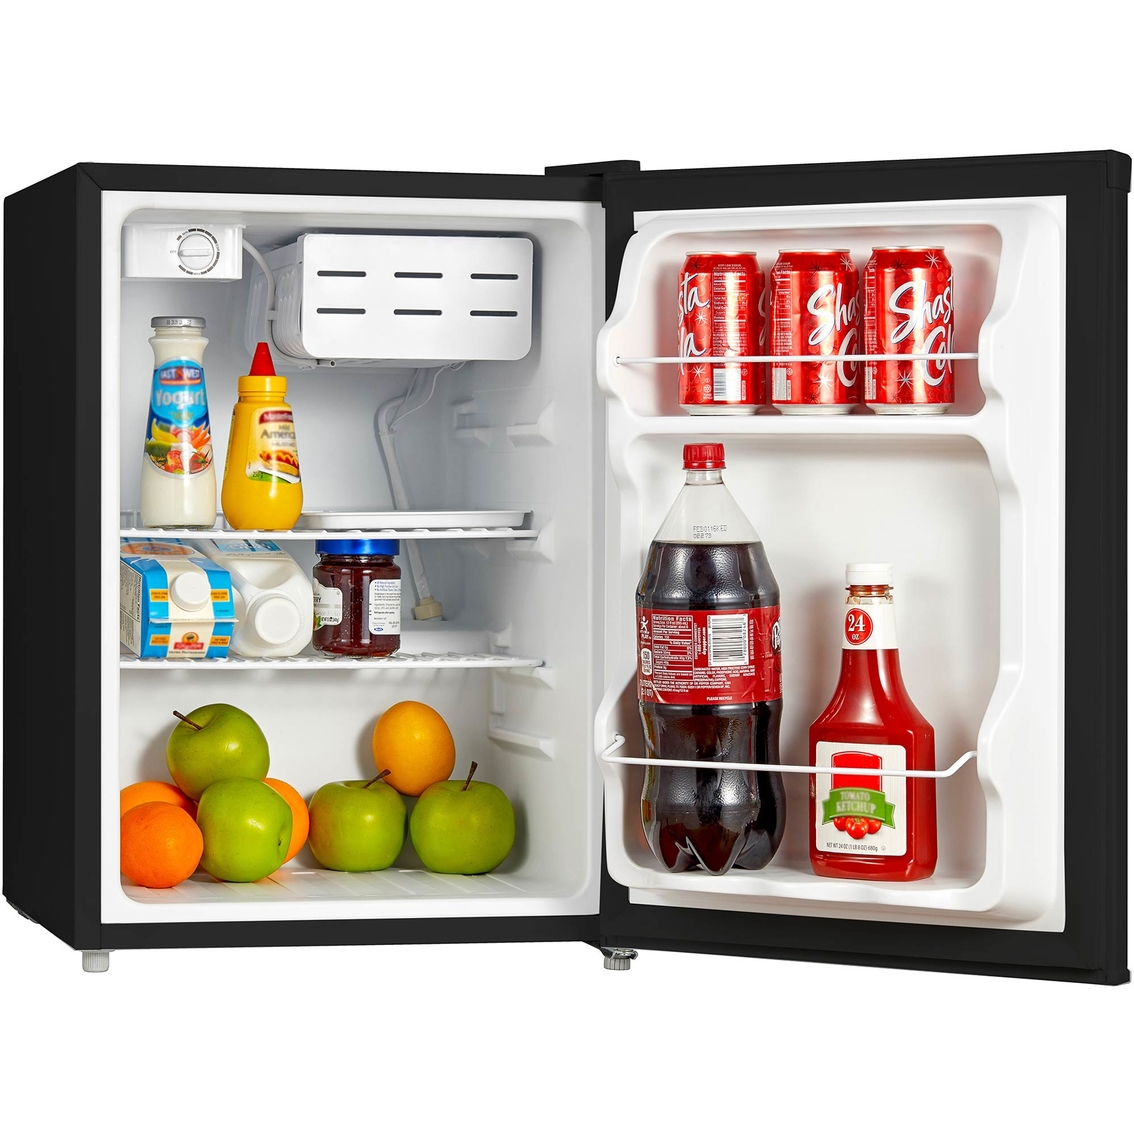 Midea 2.4 cu. ft. Single Door Compact Refrigerator Black - Image 2 of 2